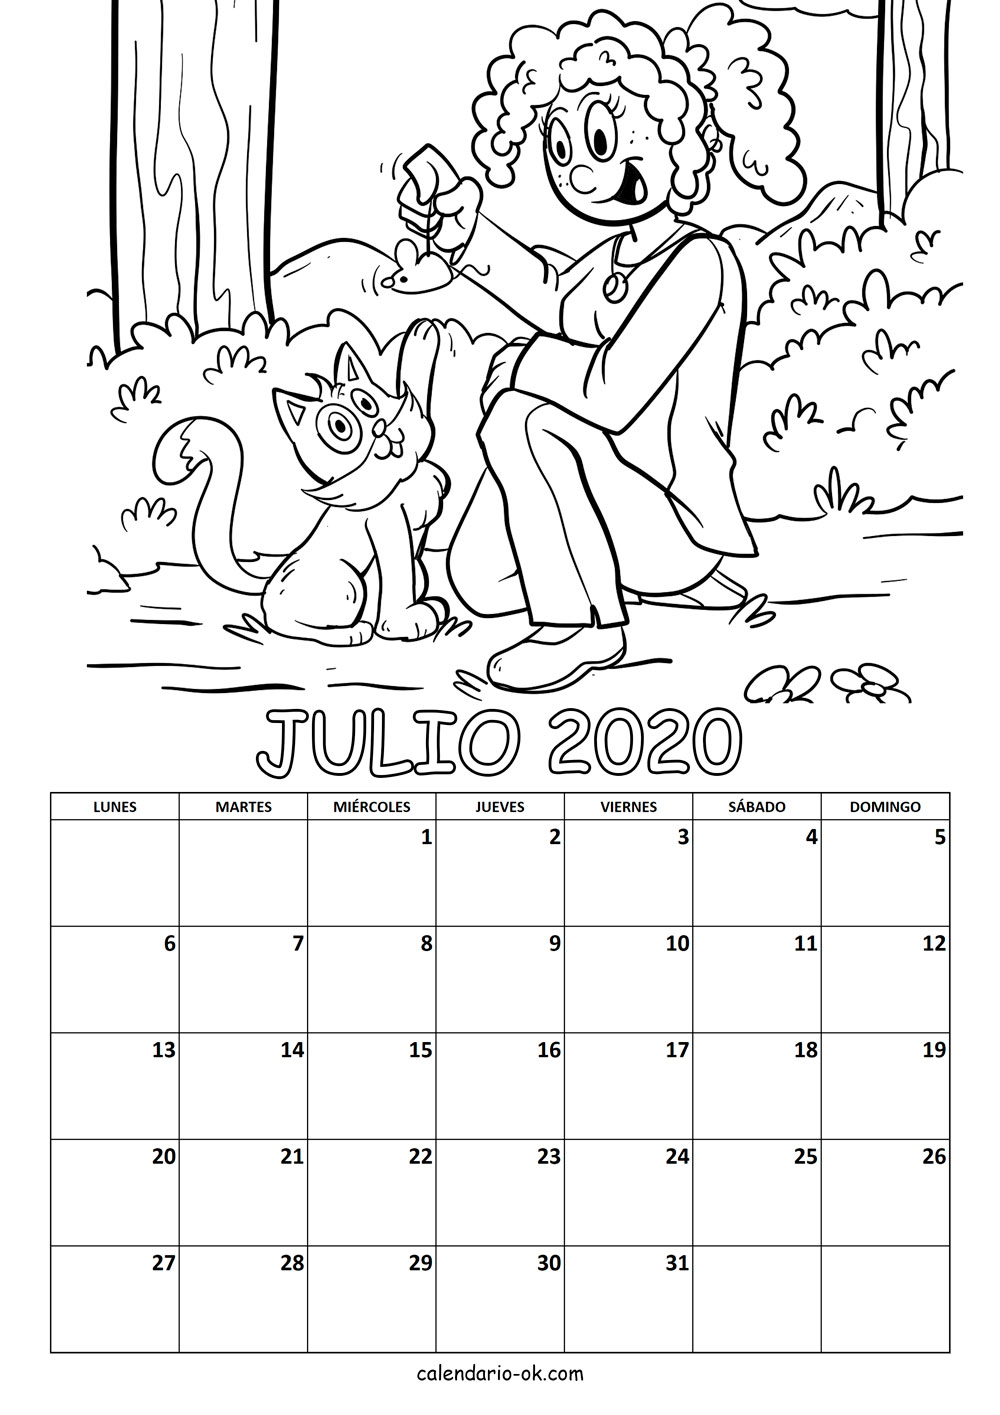 Calendario JULIO 2020 COLOREAR